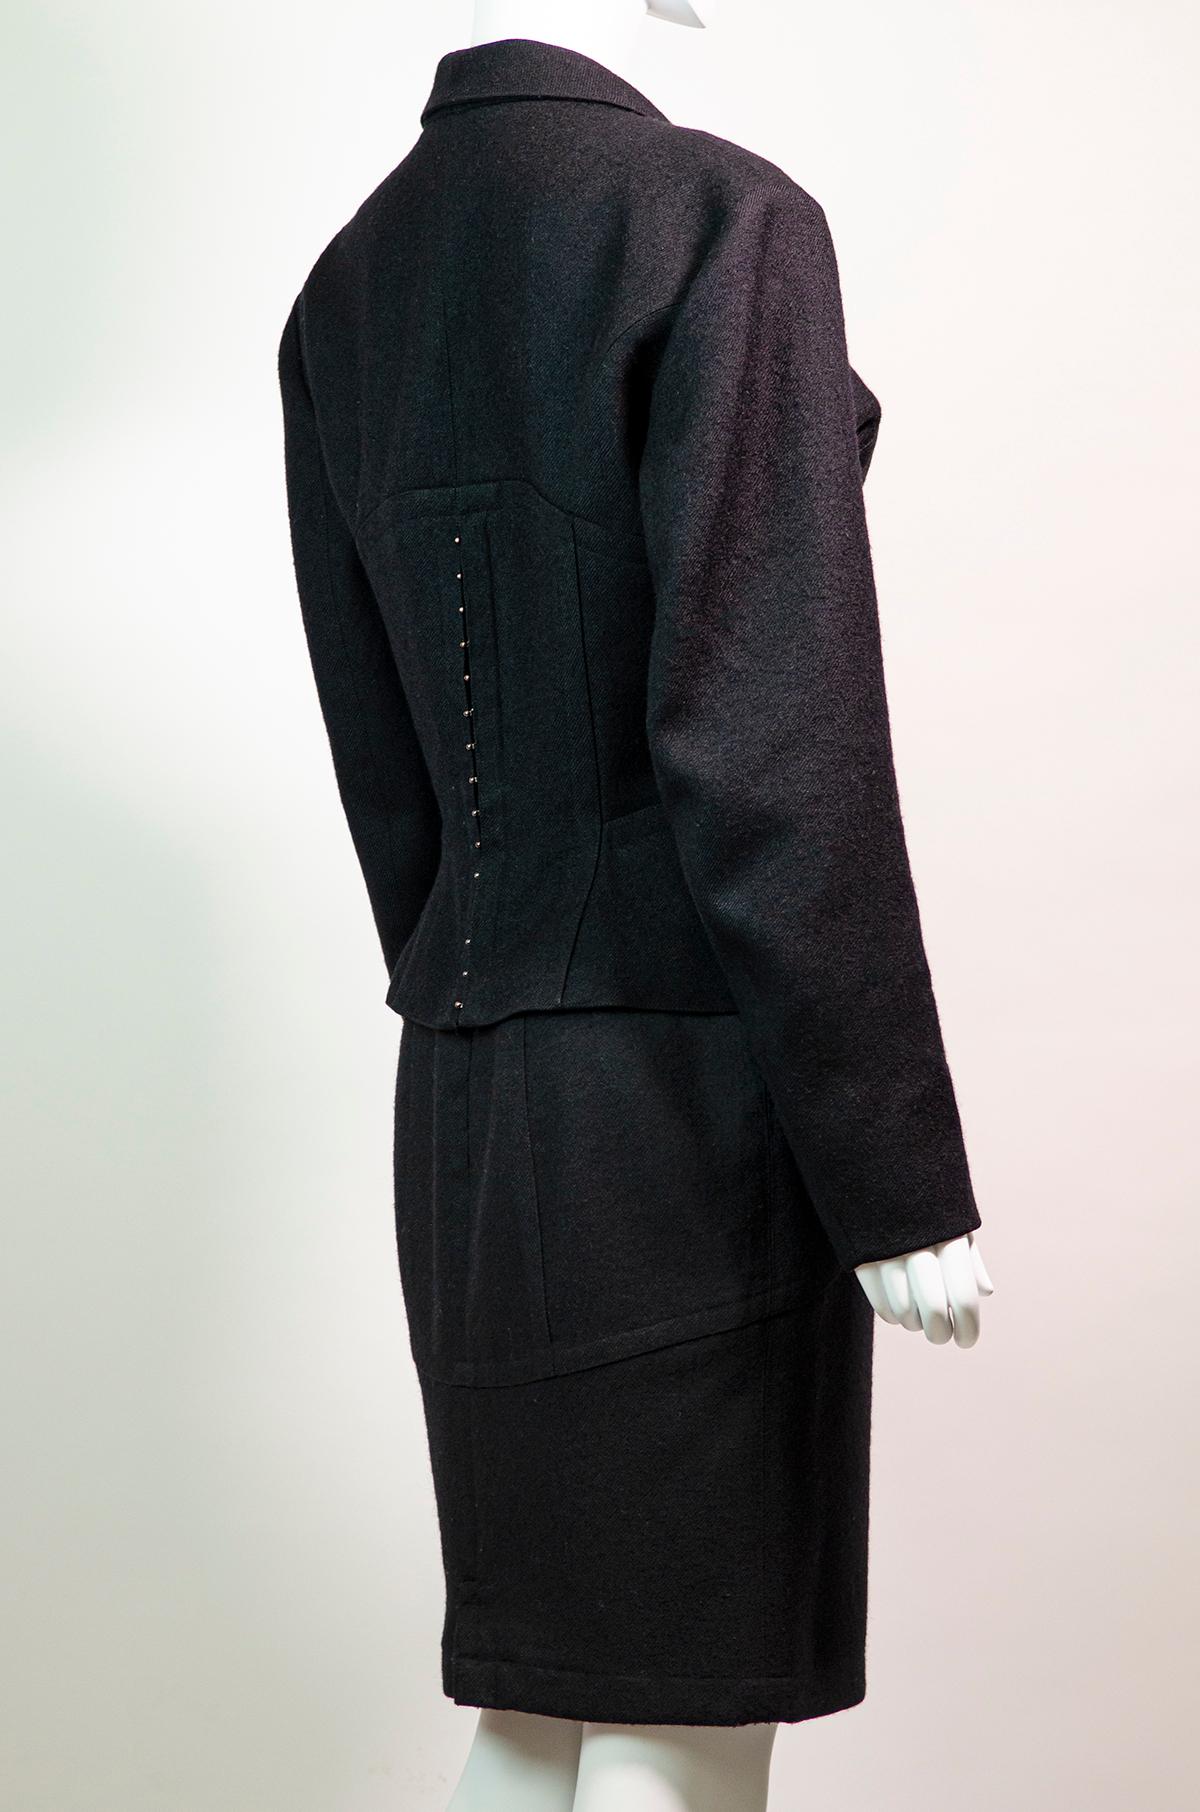 ALAÏA F/W 1987 Runway Vintage Wool Corset Suit 1